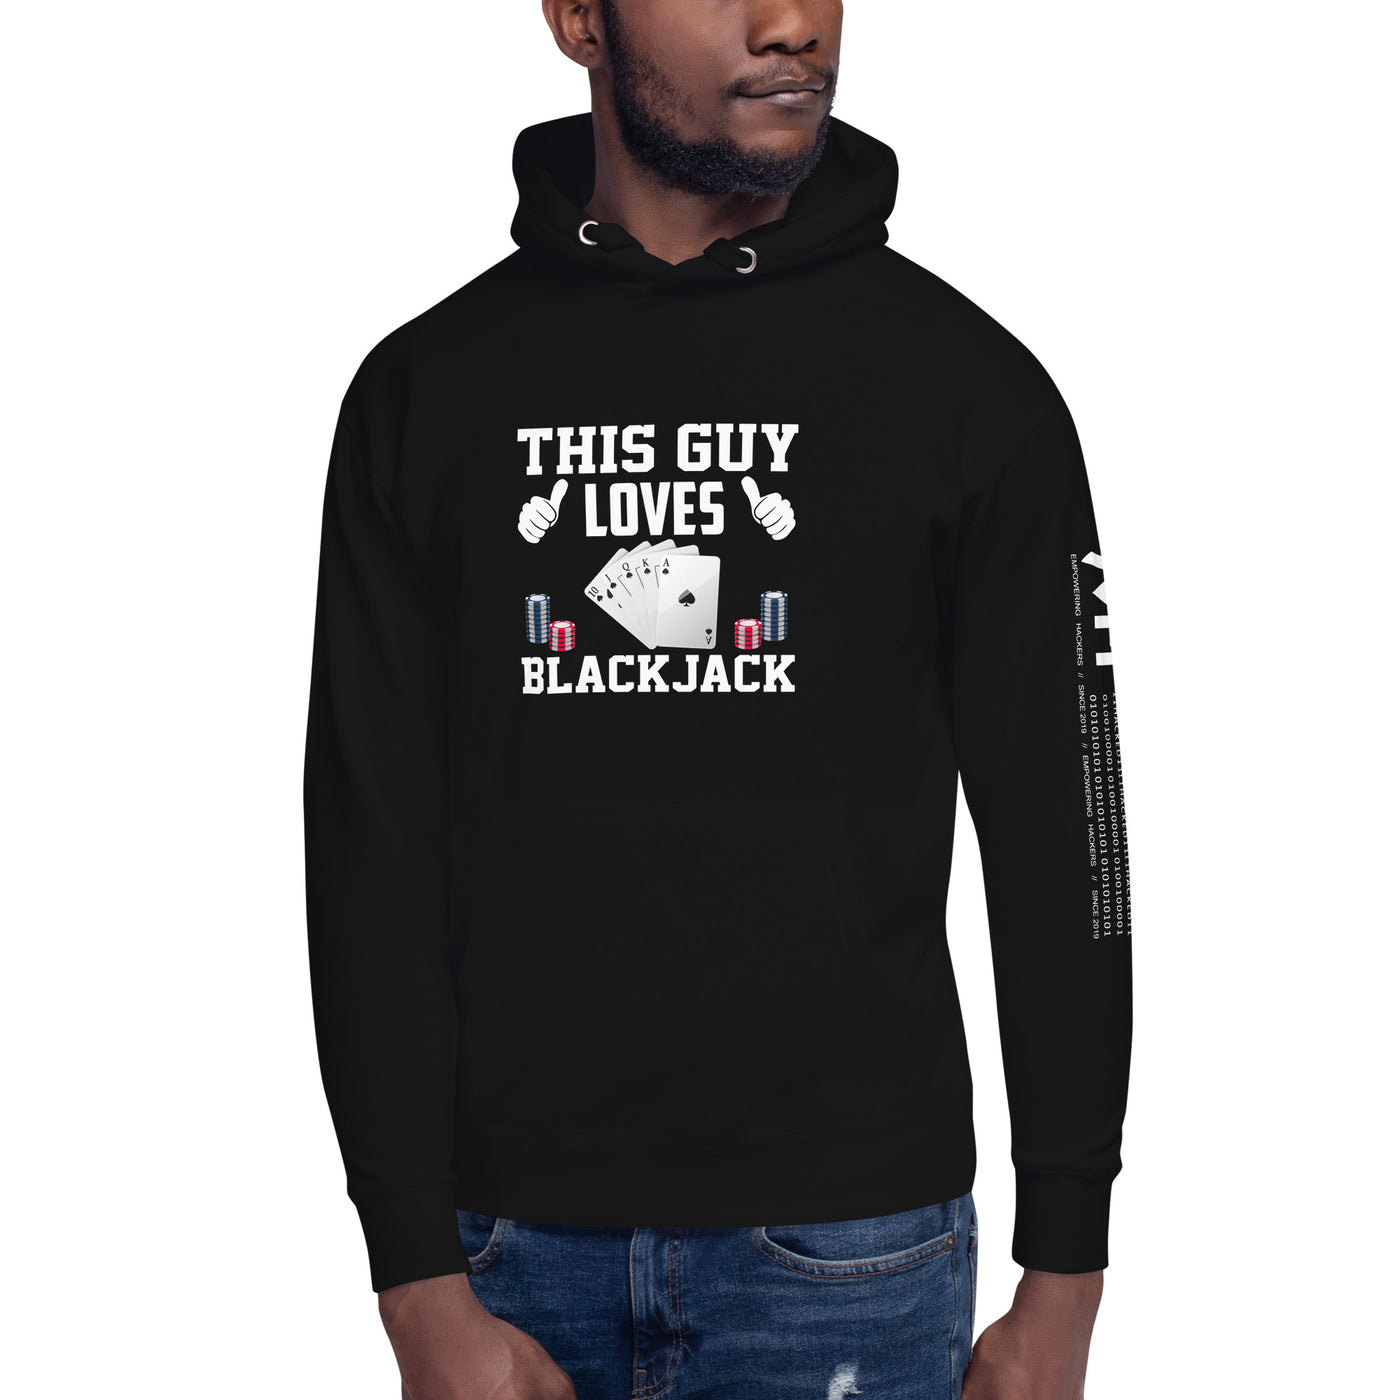 This Guy Loves Black Jack V1 - Unisex Hoodie